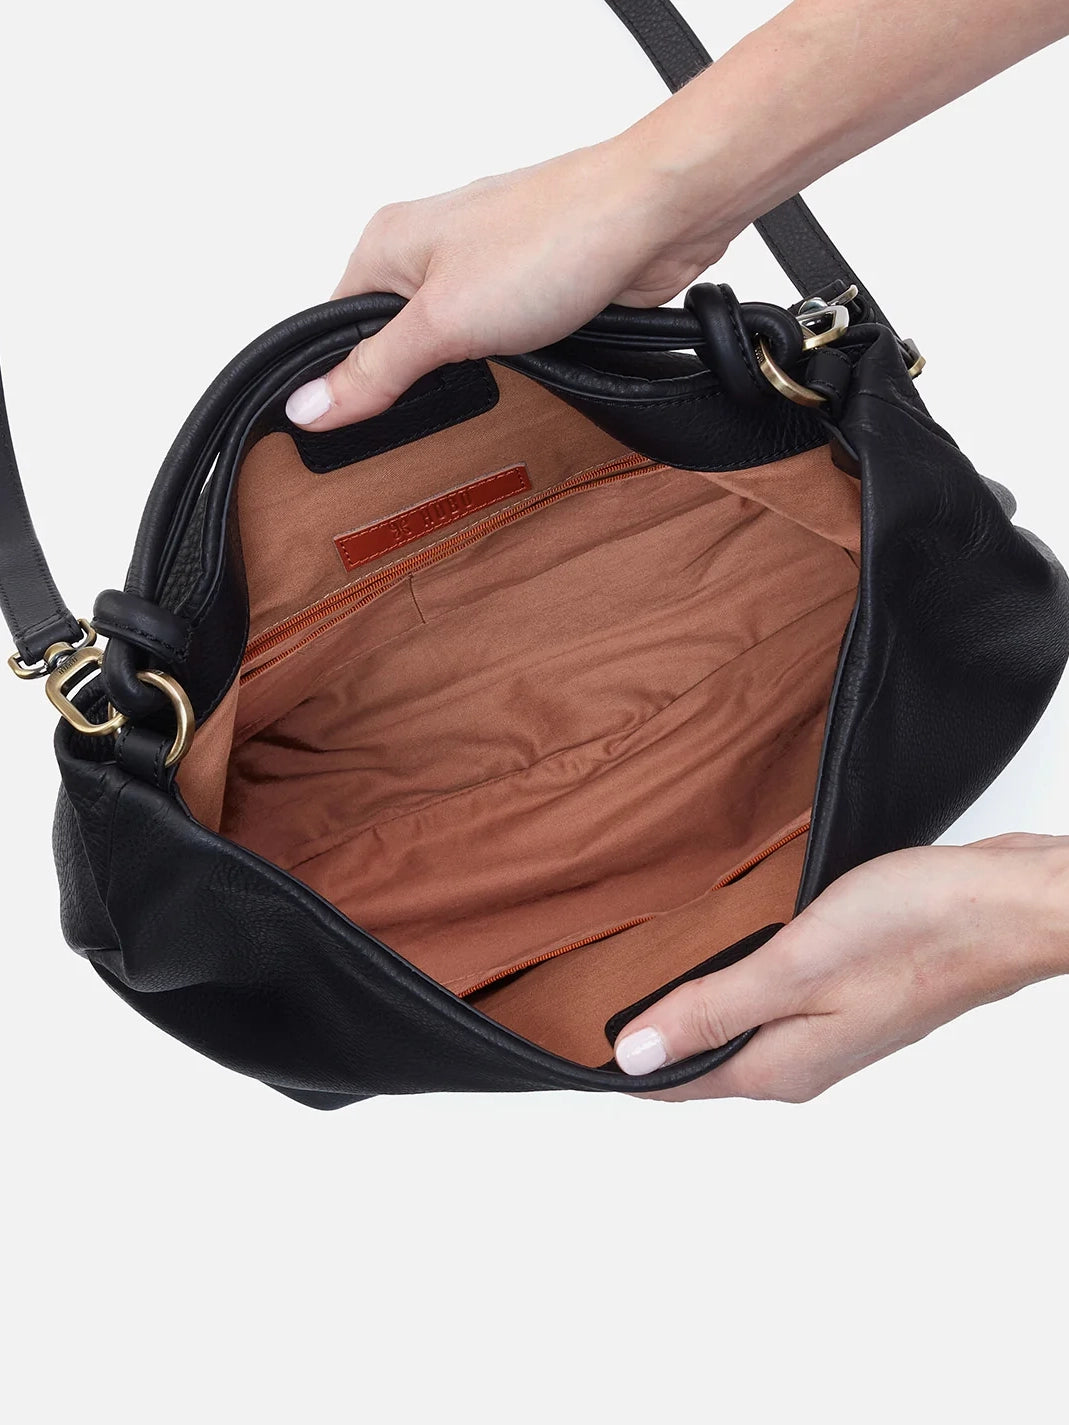 hobo linkley hobo bag soft pebbled leather in black-inside view